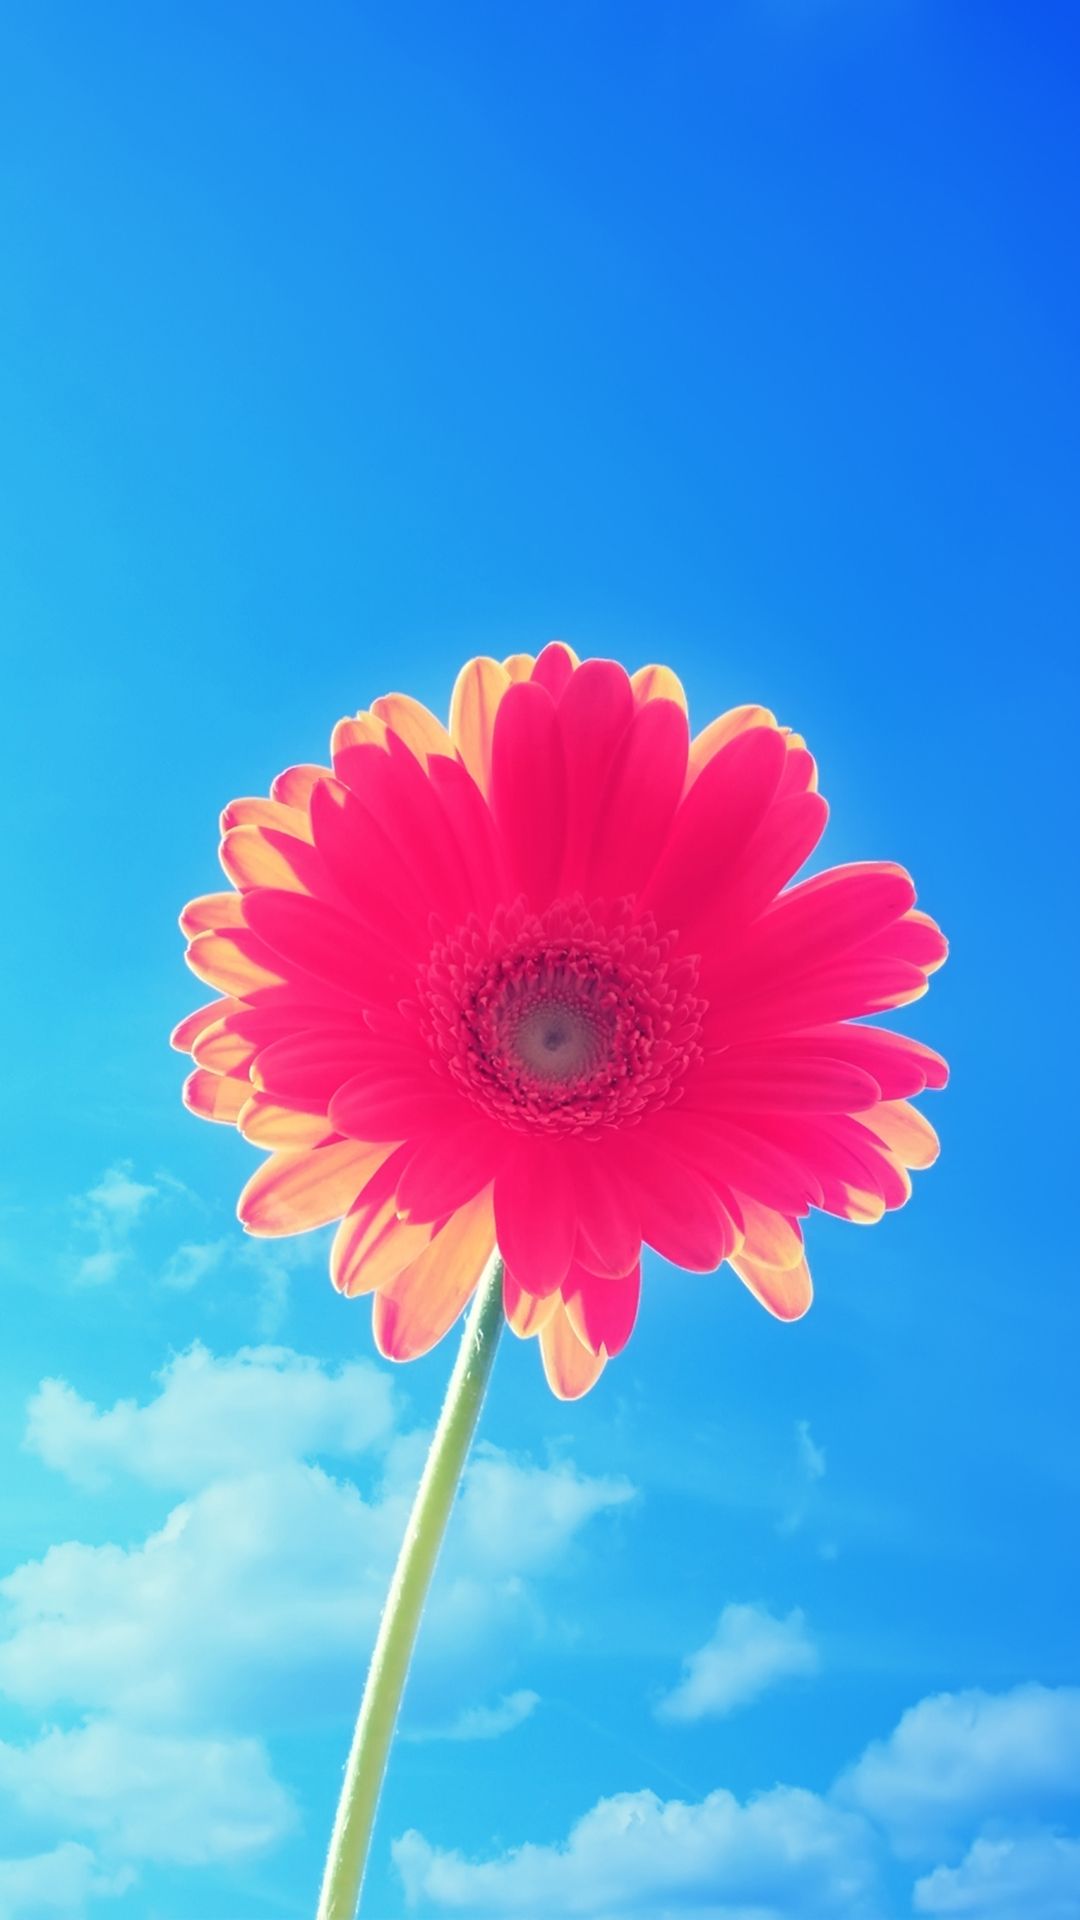 iPhone Wallpaper. Flower, Flowering plant, Sky, barberton daisy